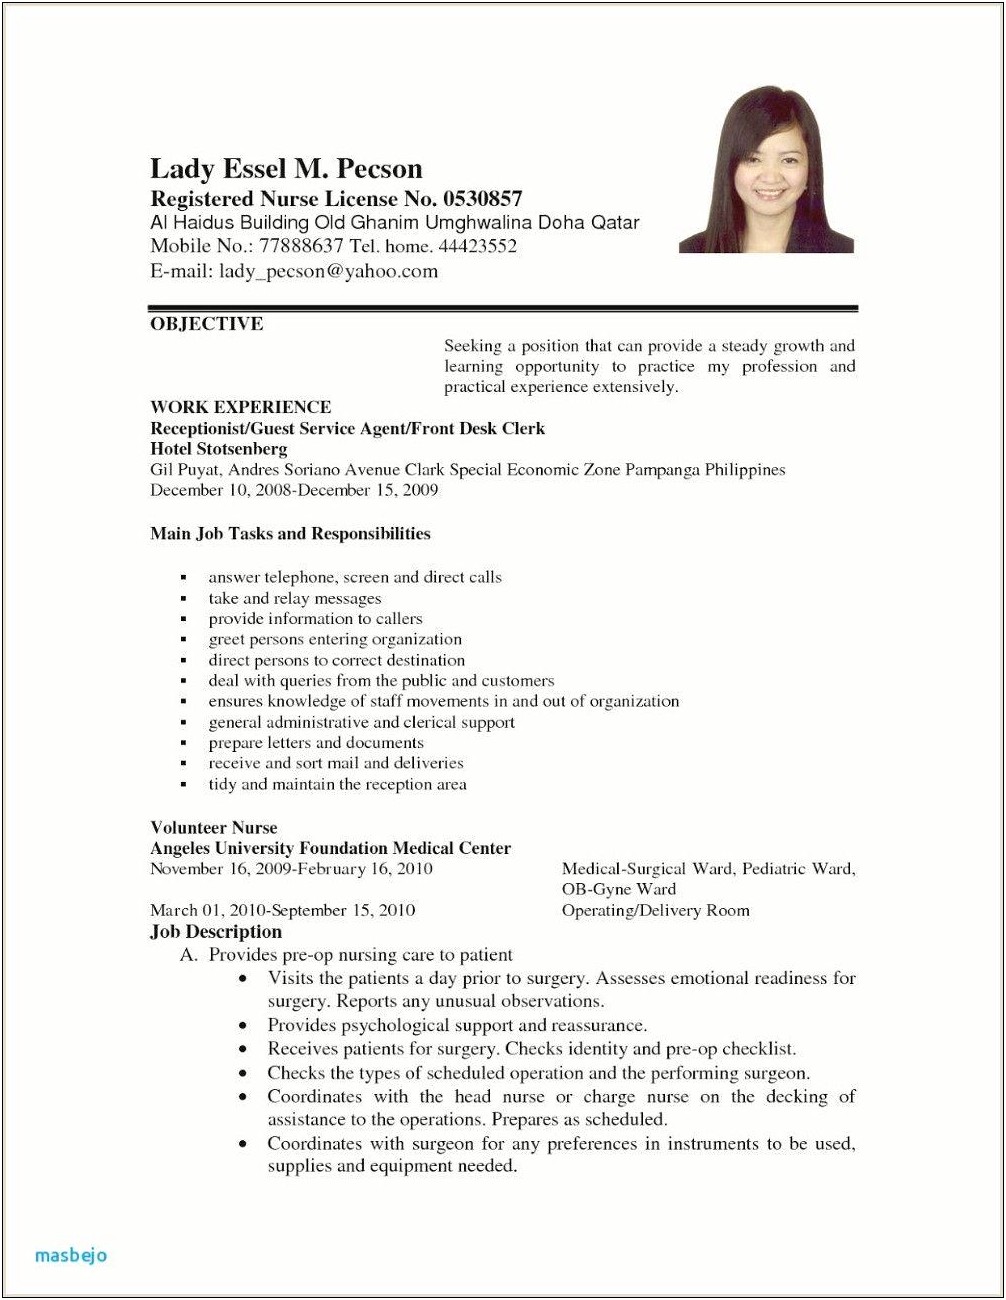 Professional Sounding Description Of Waitress For Resume